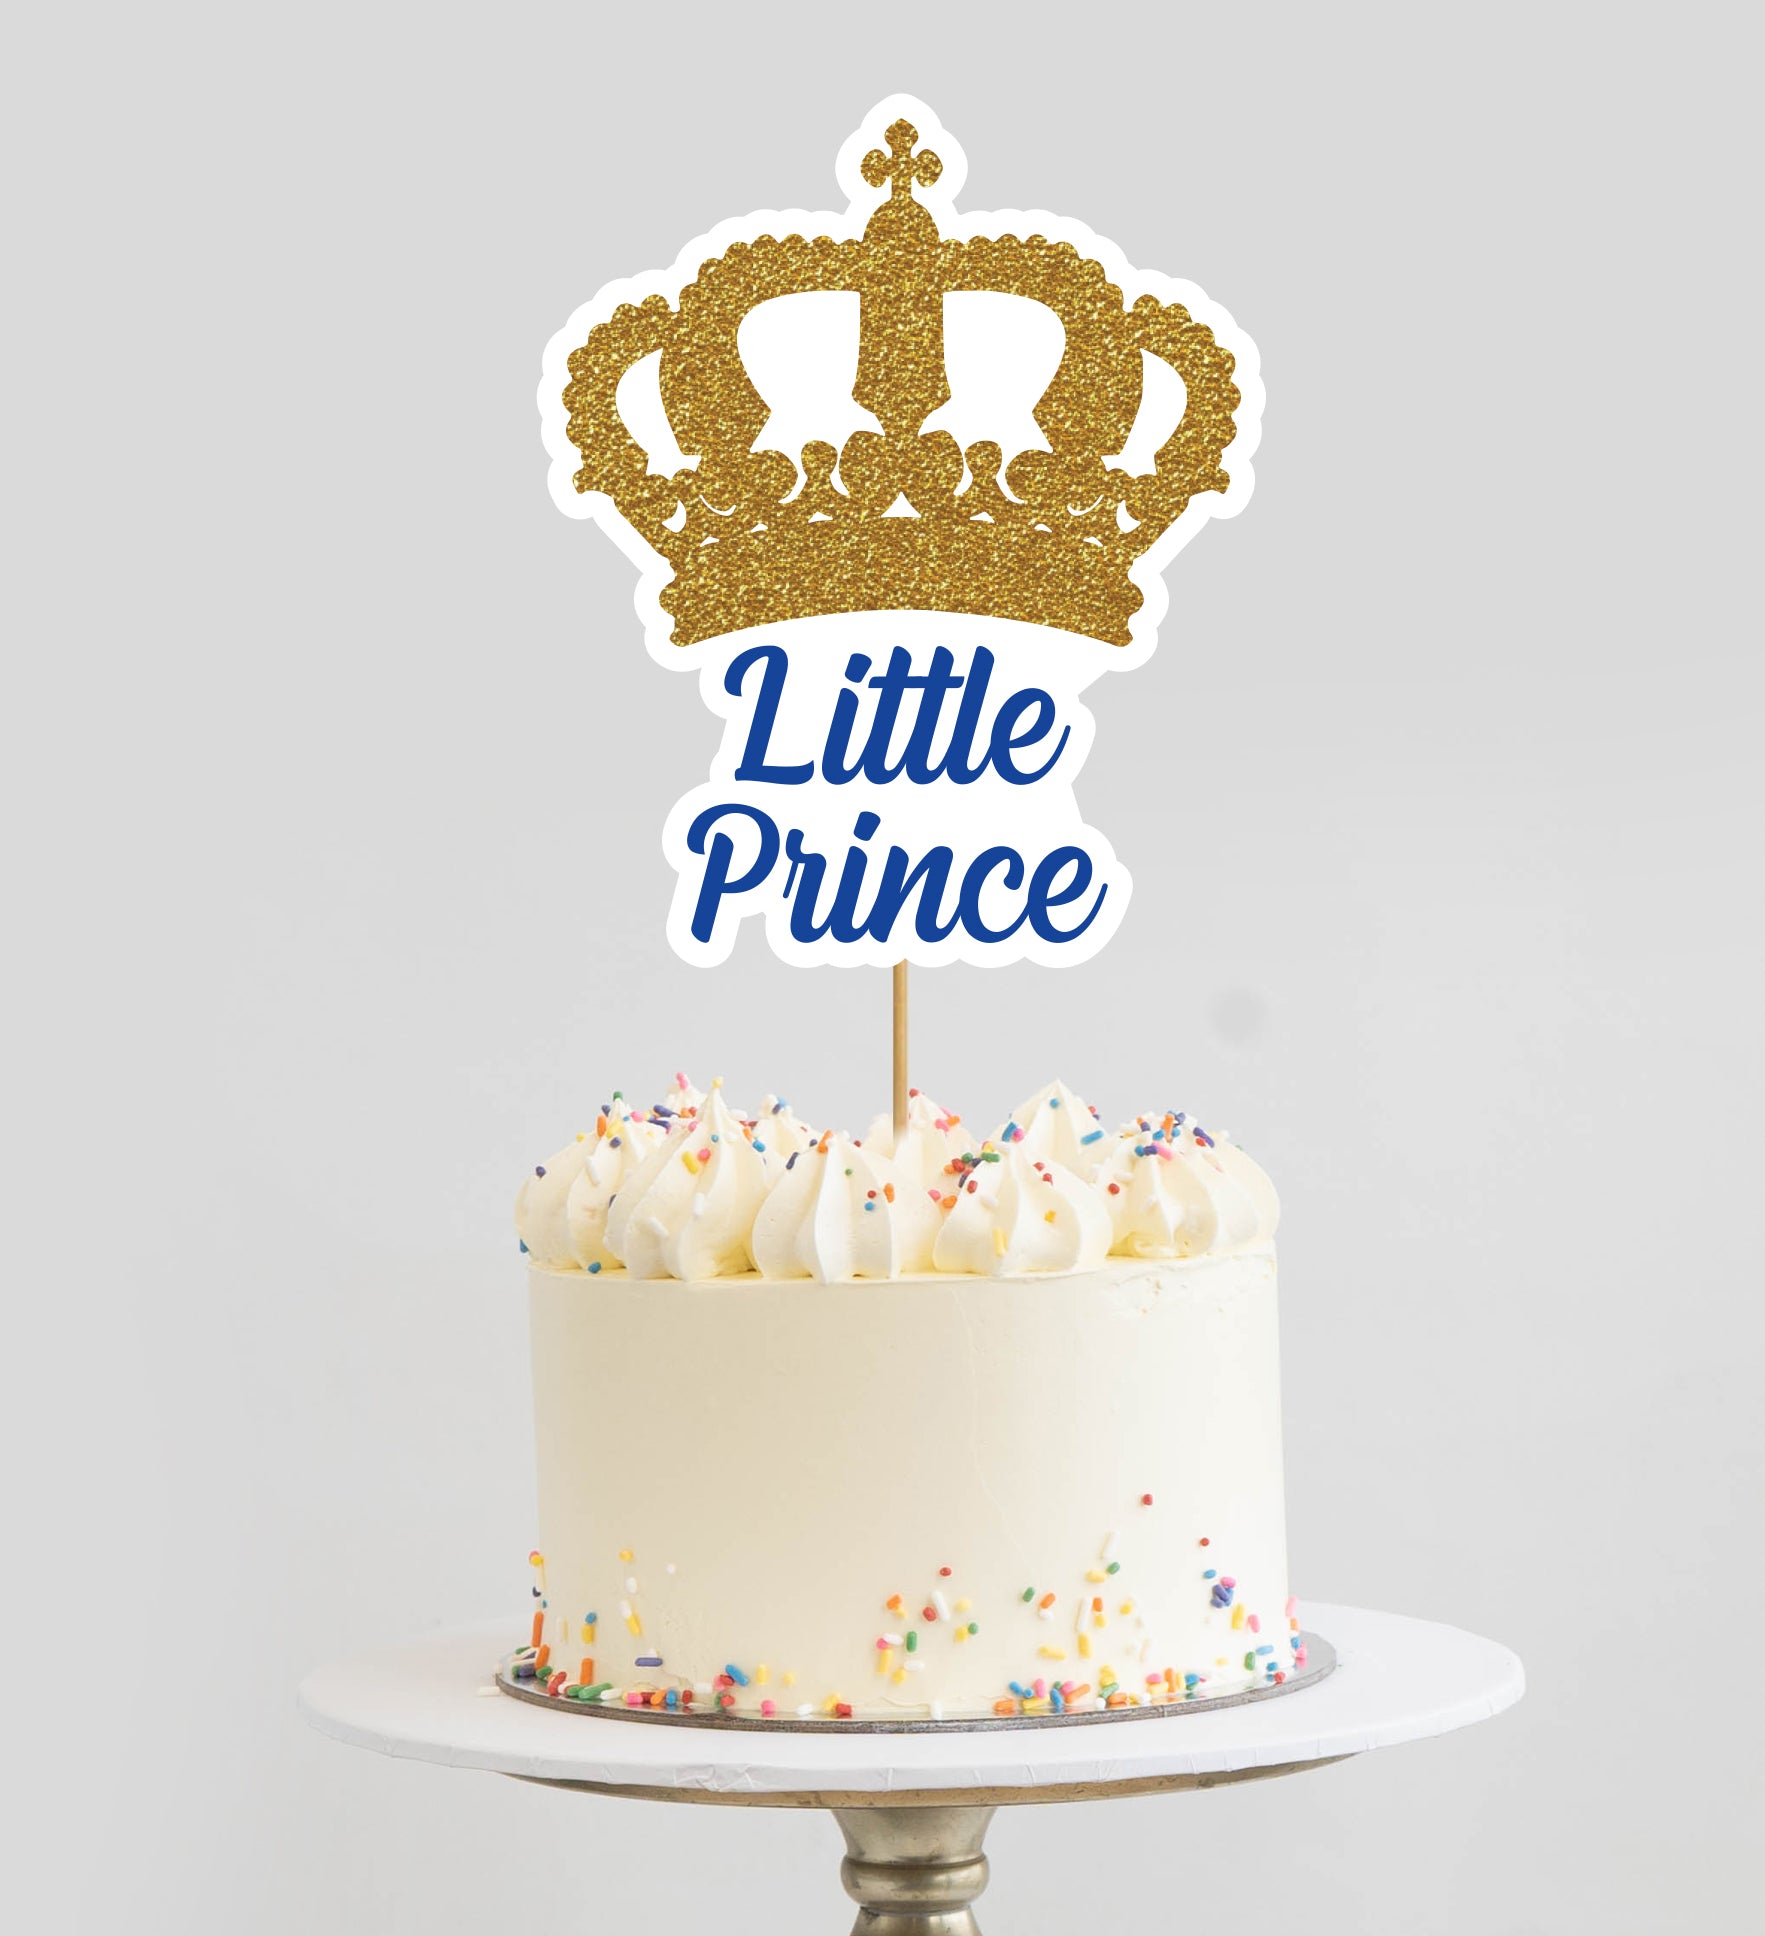 Royal Prince Theme Cake - Picture of The Cloud 9 Bakes, Dartford -  Tripadvisor